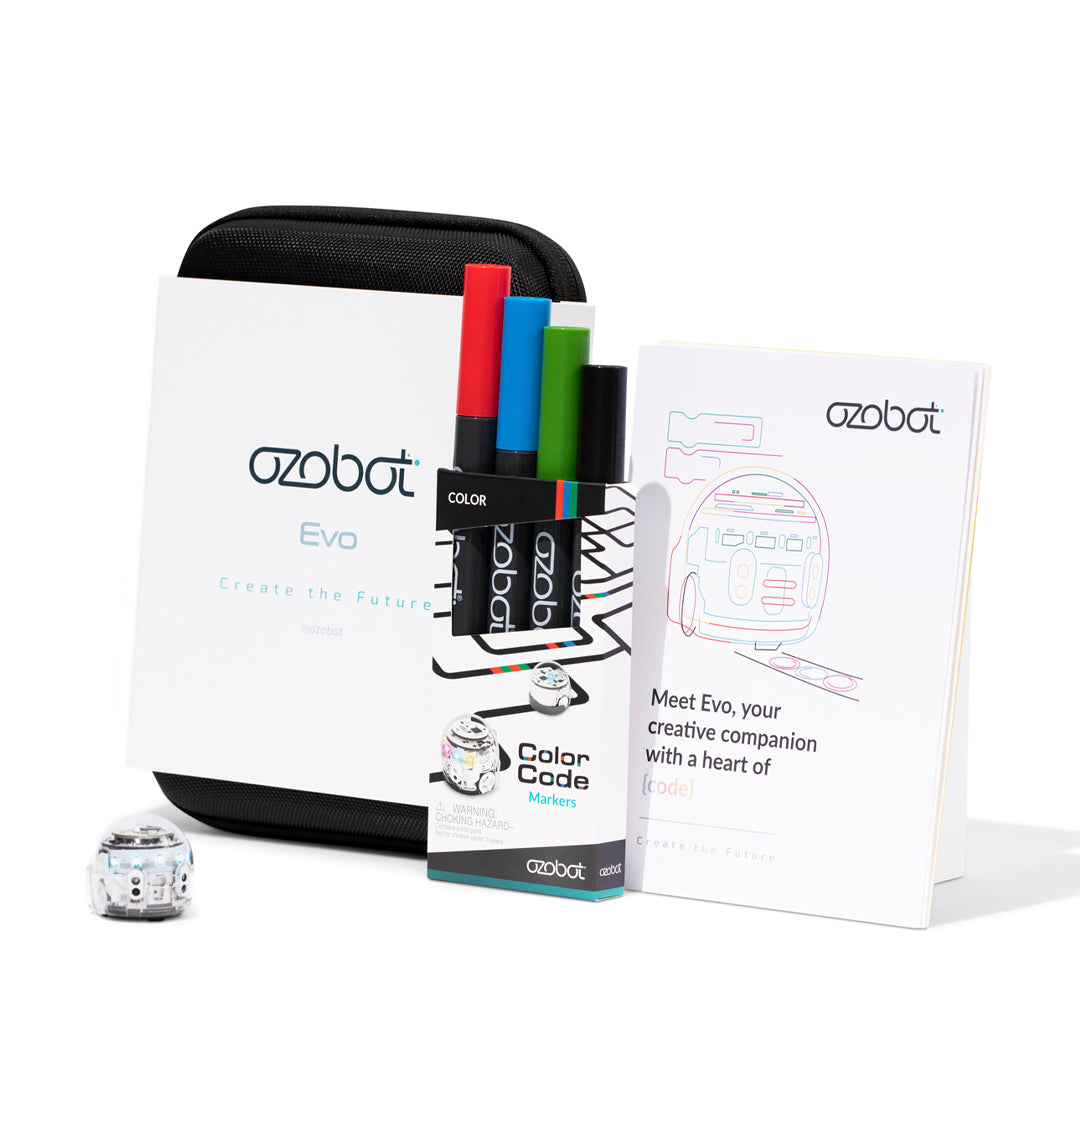 Ozobot Evo Mini Classroom Kit (6 Bots)